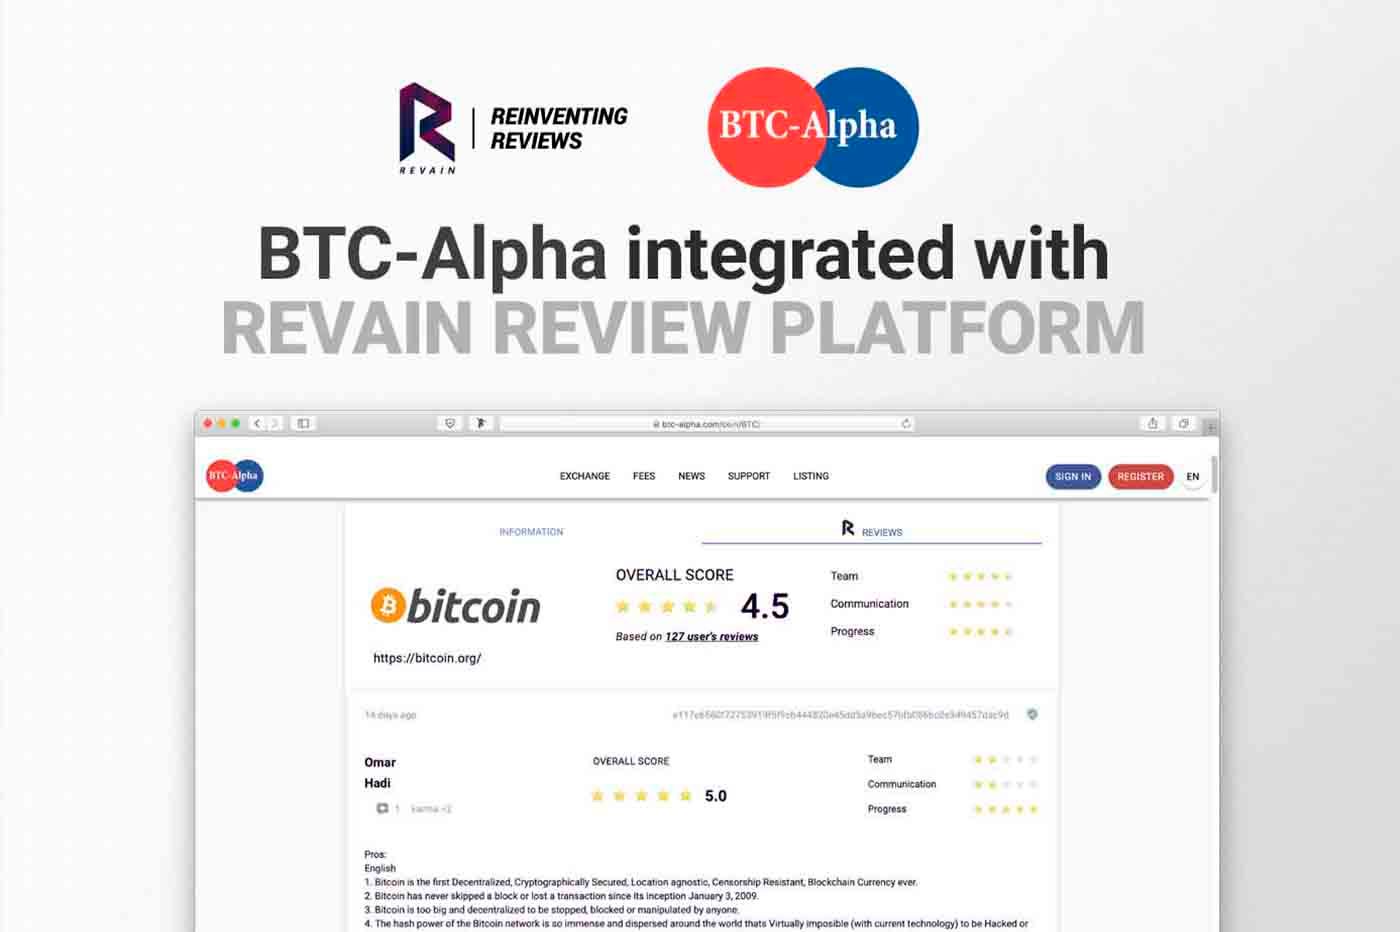 Article Revain integrates with BTC-Alpha exchange